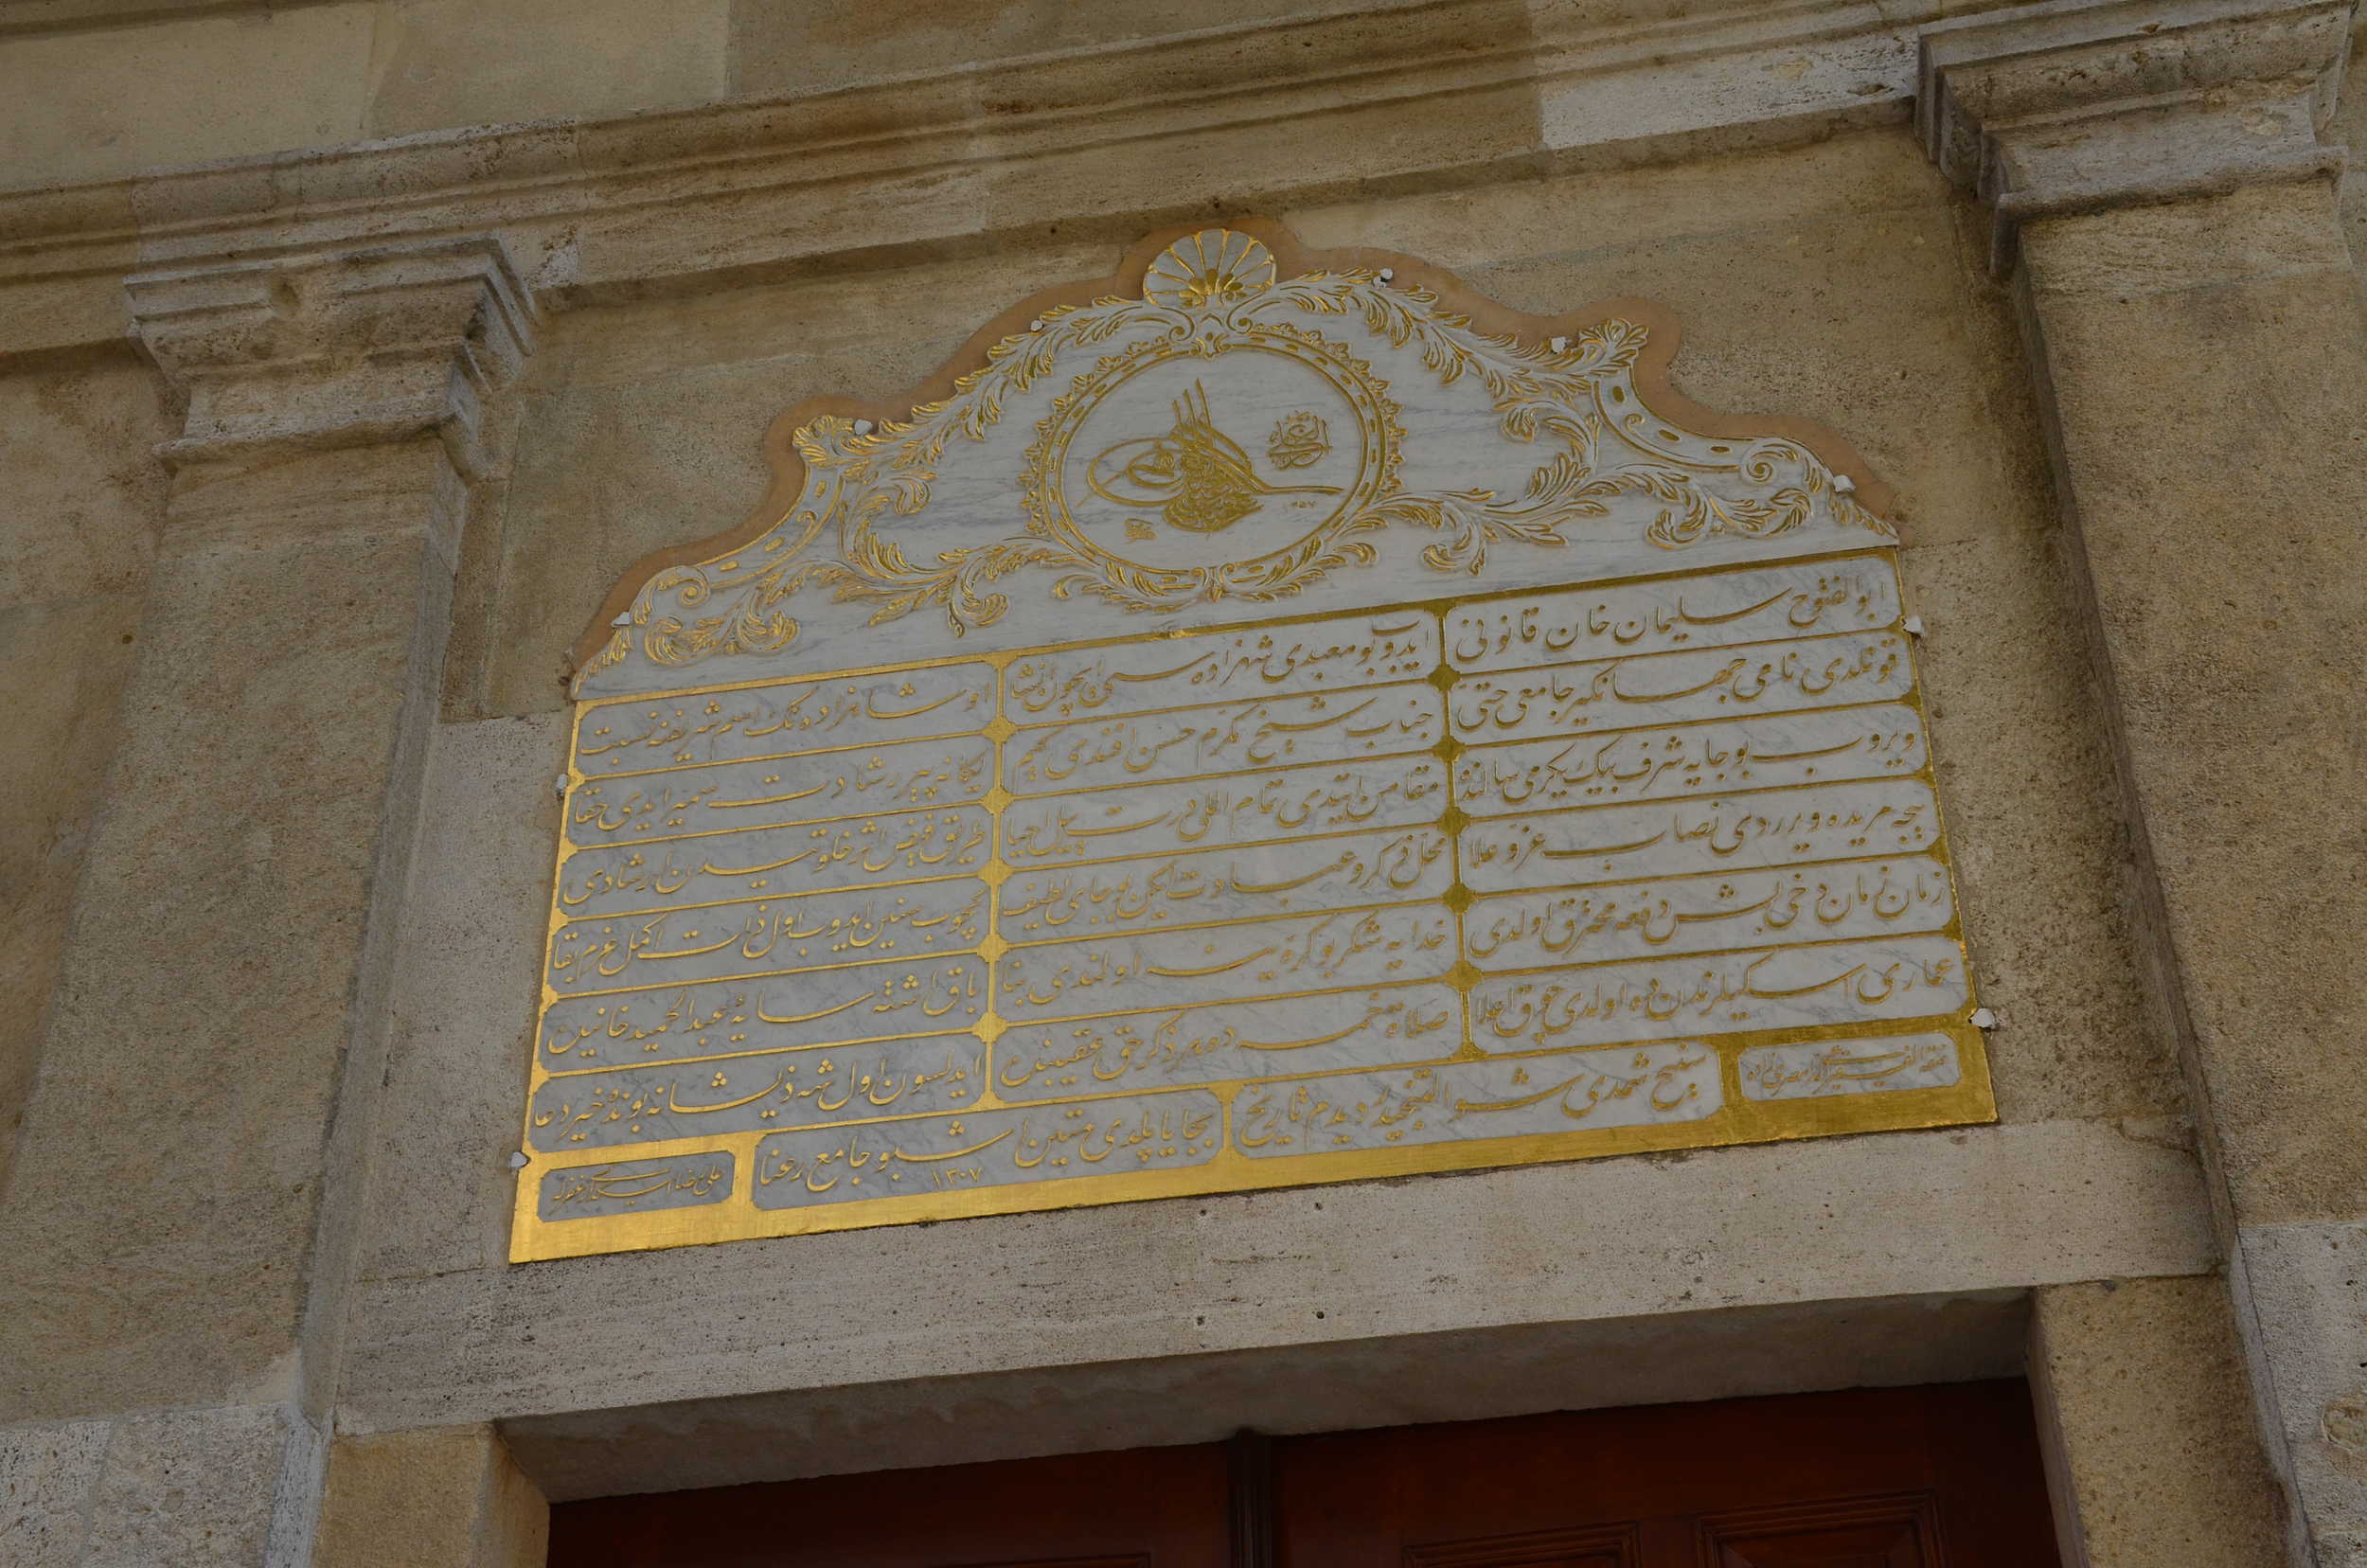 Inscription above the entrance to the Cihangir Mosque in Cihangir, Istanbul, Turkey